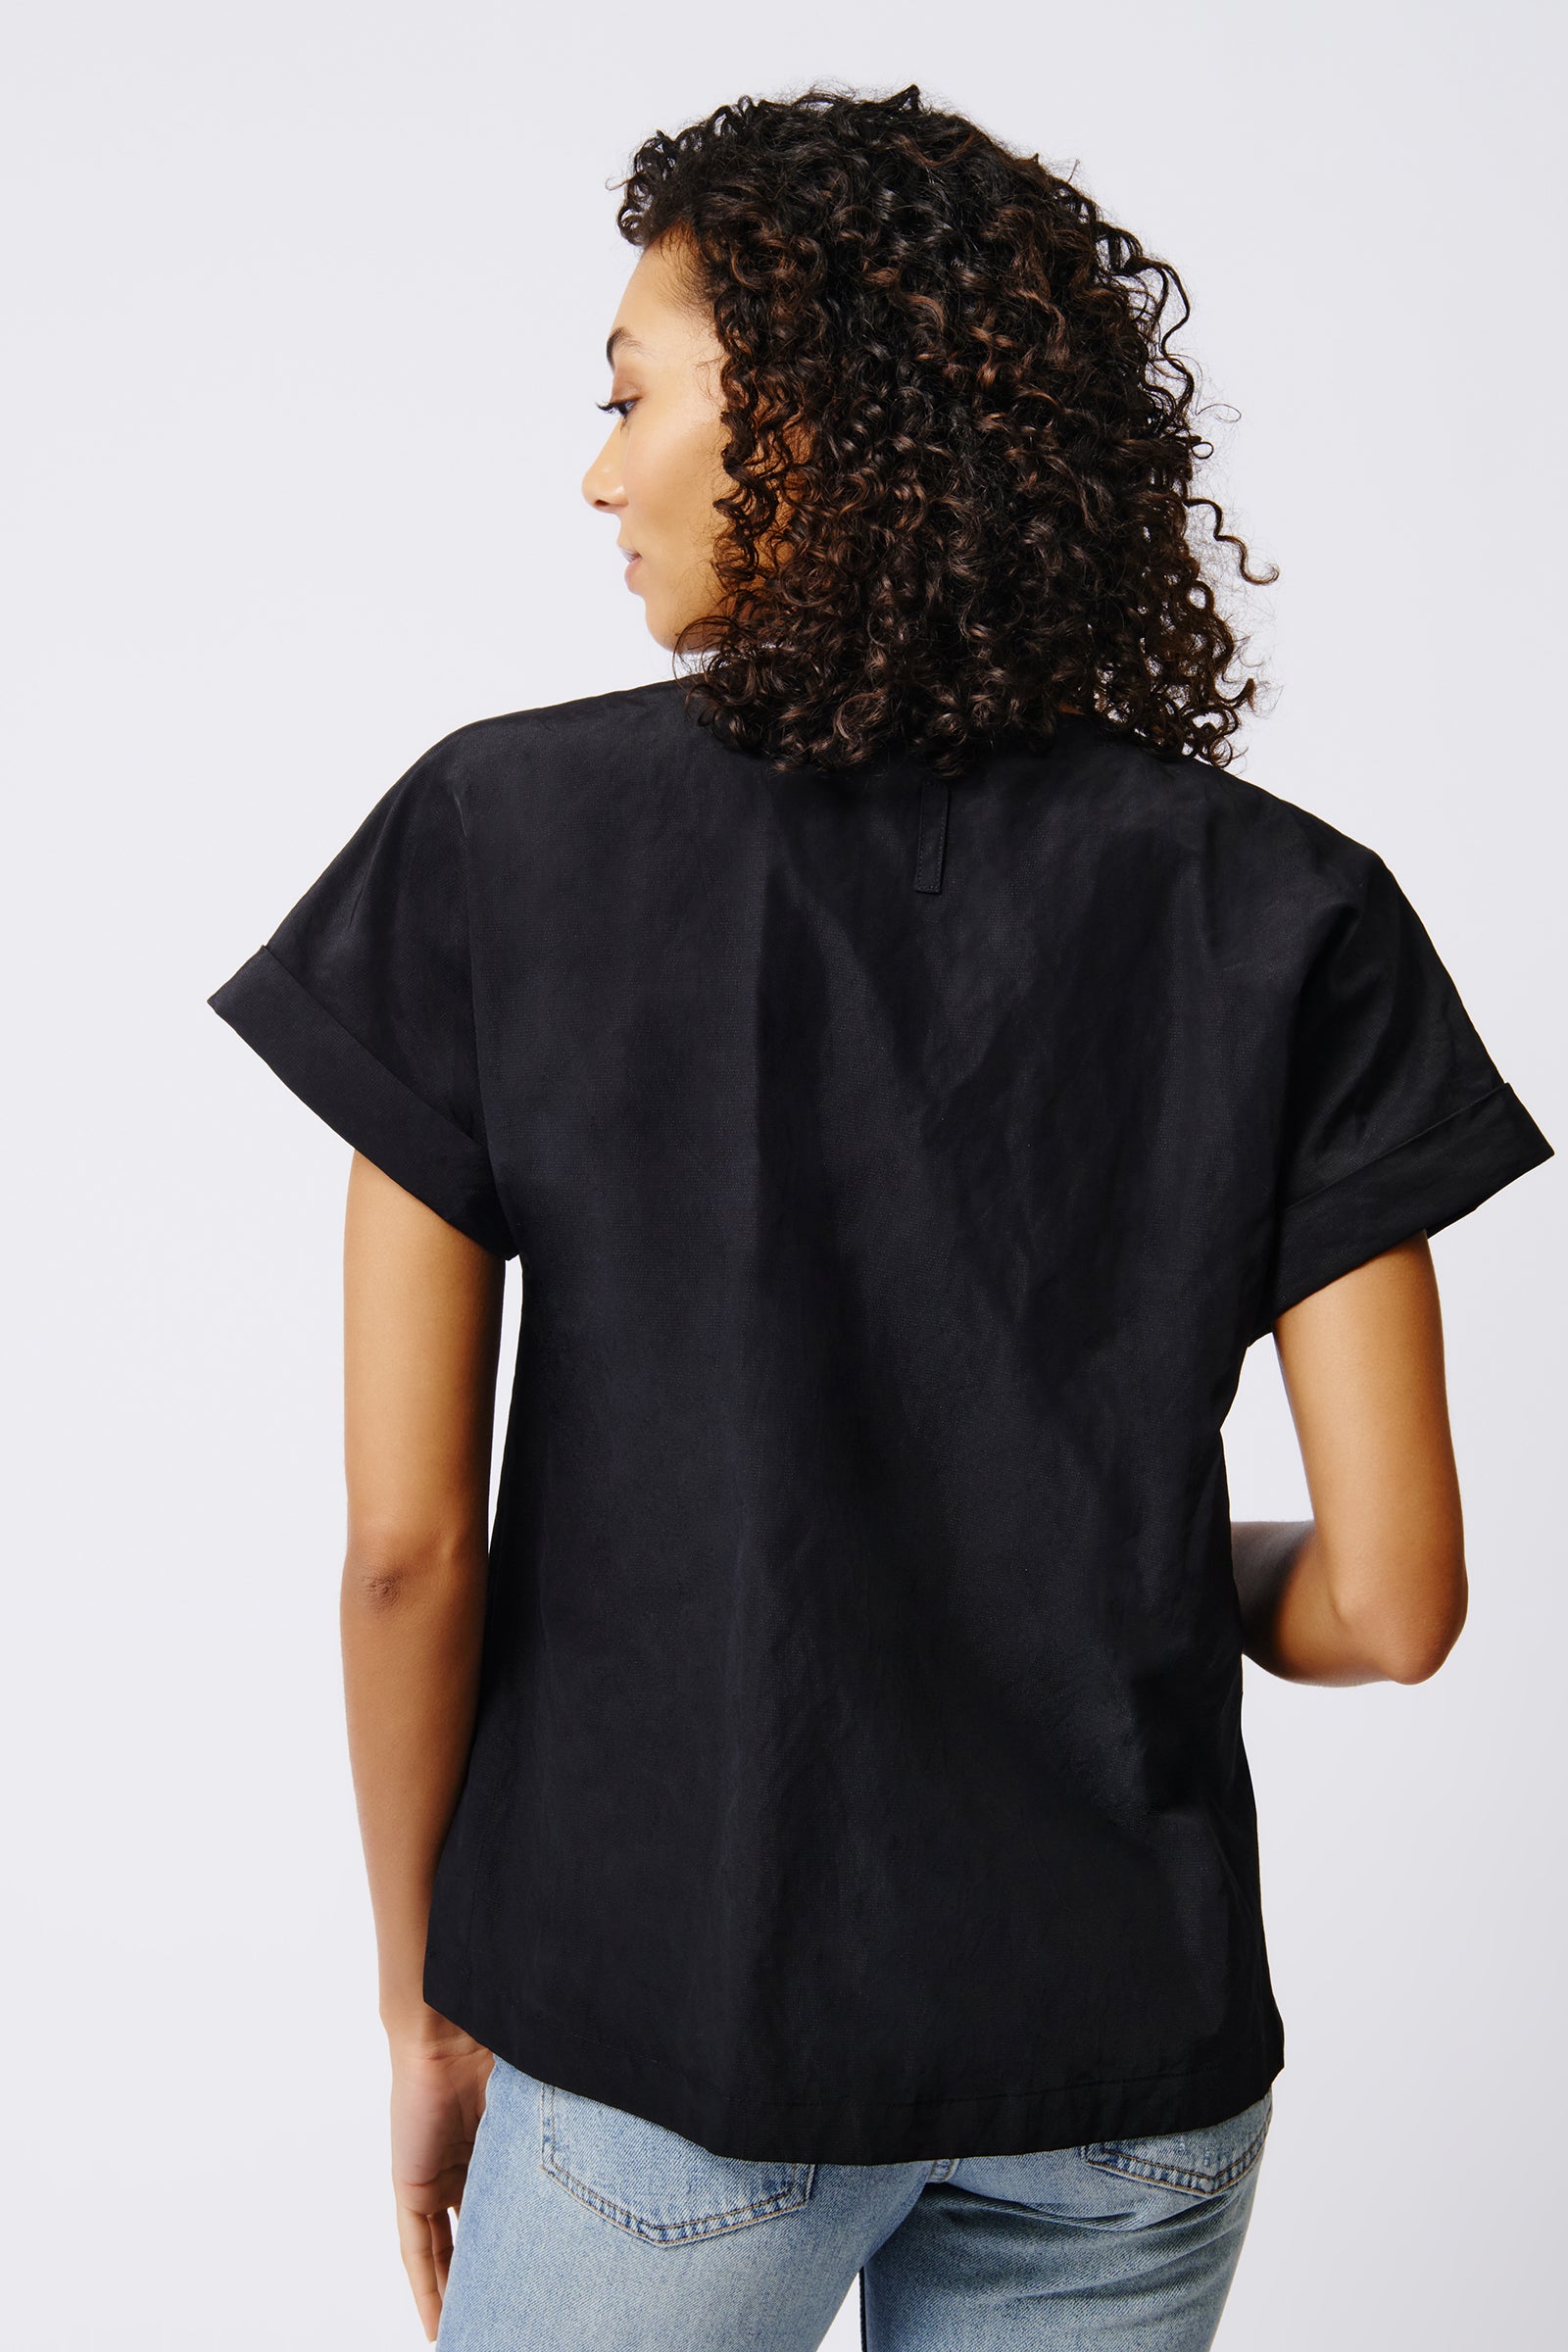 Kal Rieman Natalie Short Sleeve Placket Shirt in Black on Model Back View Crop